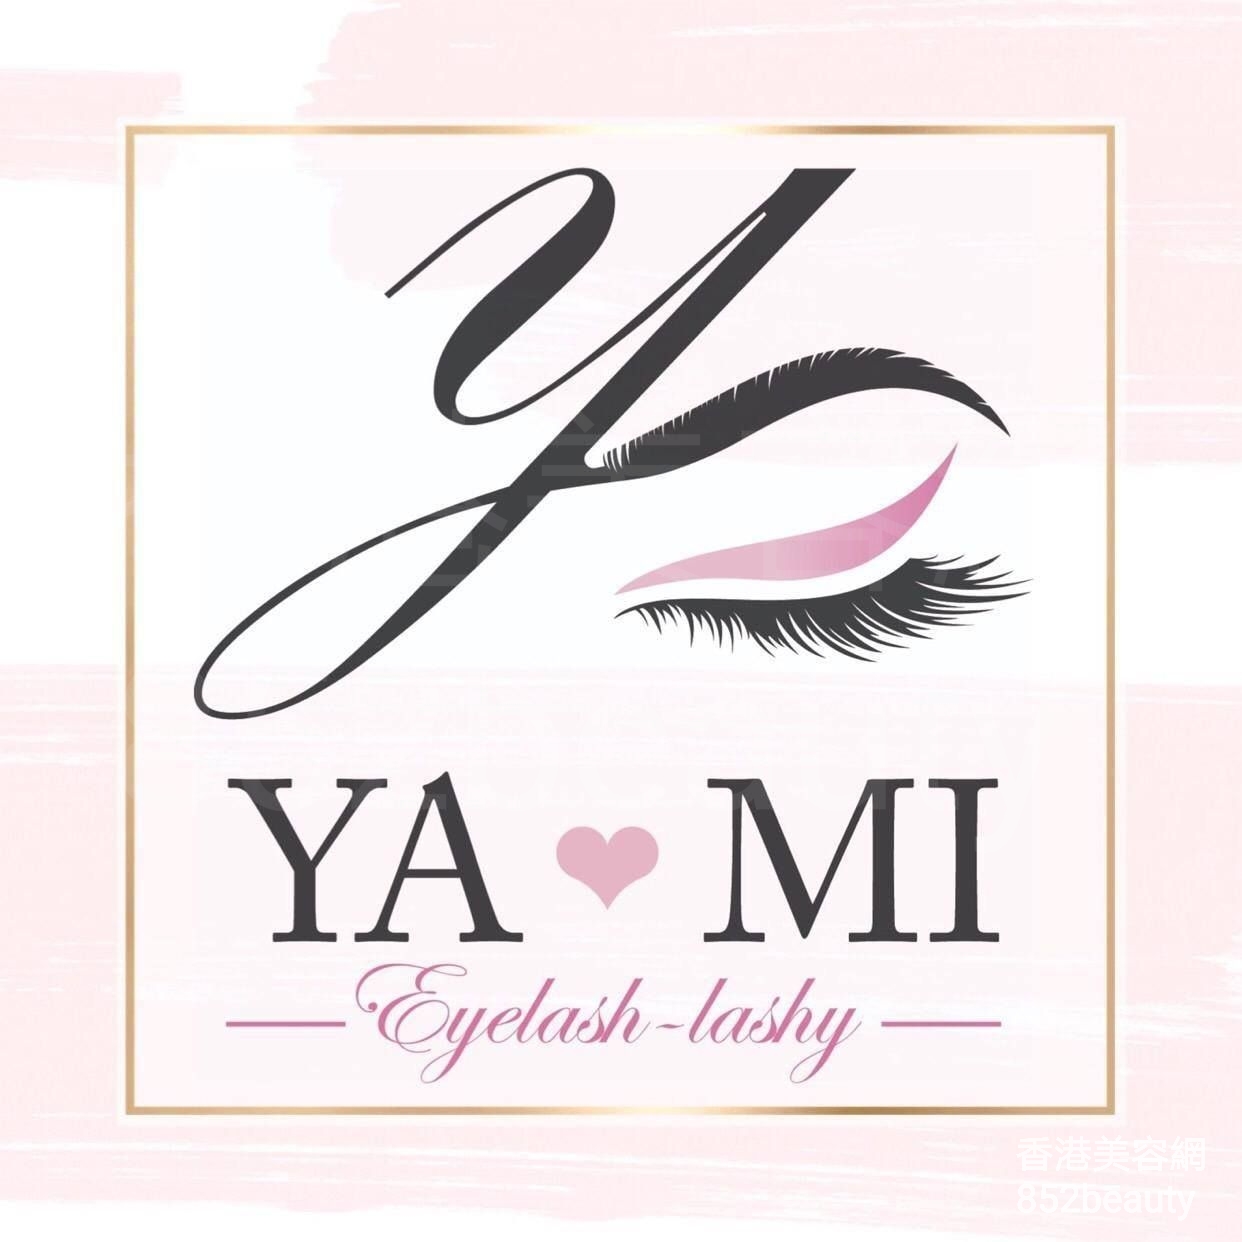 Hong Kong Beauty Salon Beauty Salon / Beautician: Ya-Mi Eyelash-Lashy